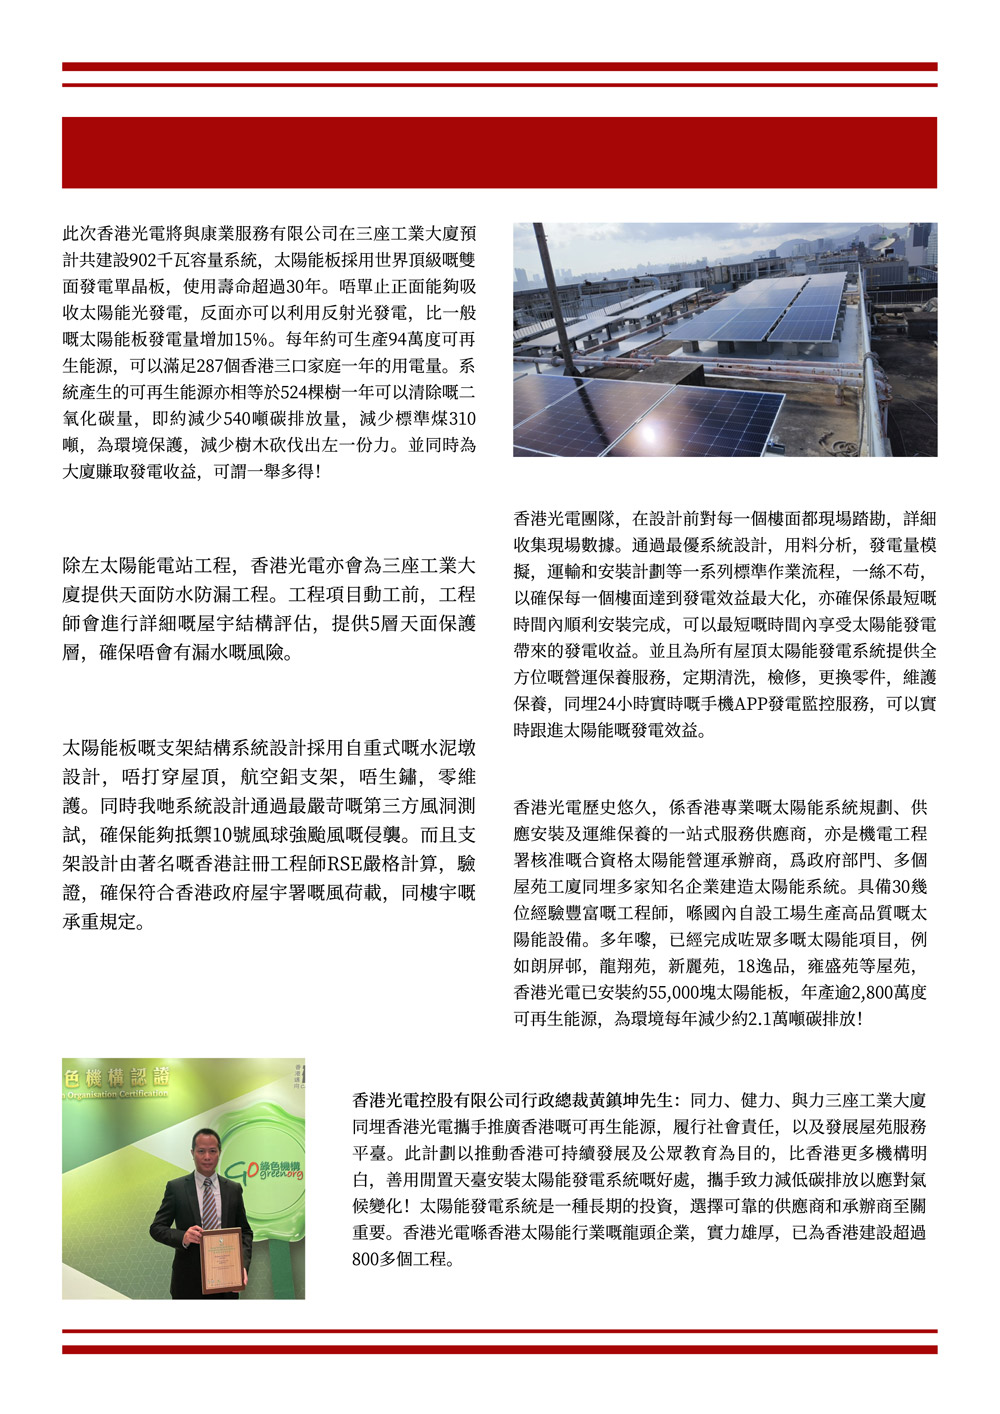 SP-Newsletter-202305期-香港光電與康業物業管理攜手在三台大廈天臺合作建造太陽能系統-2.jpg